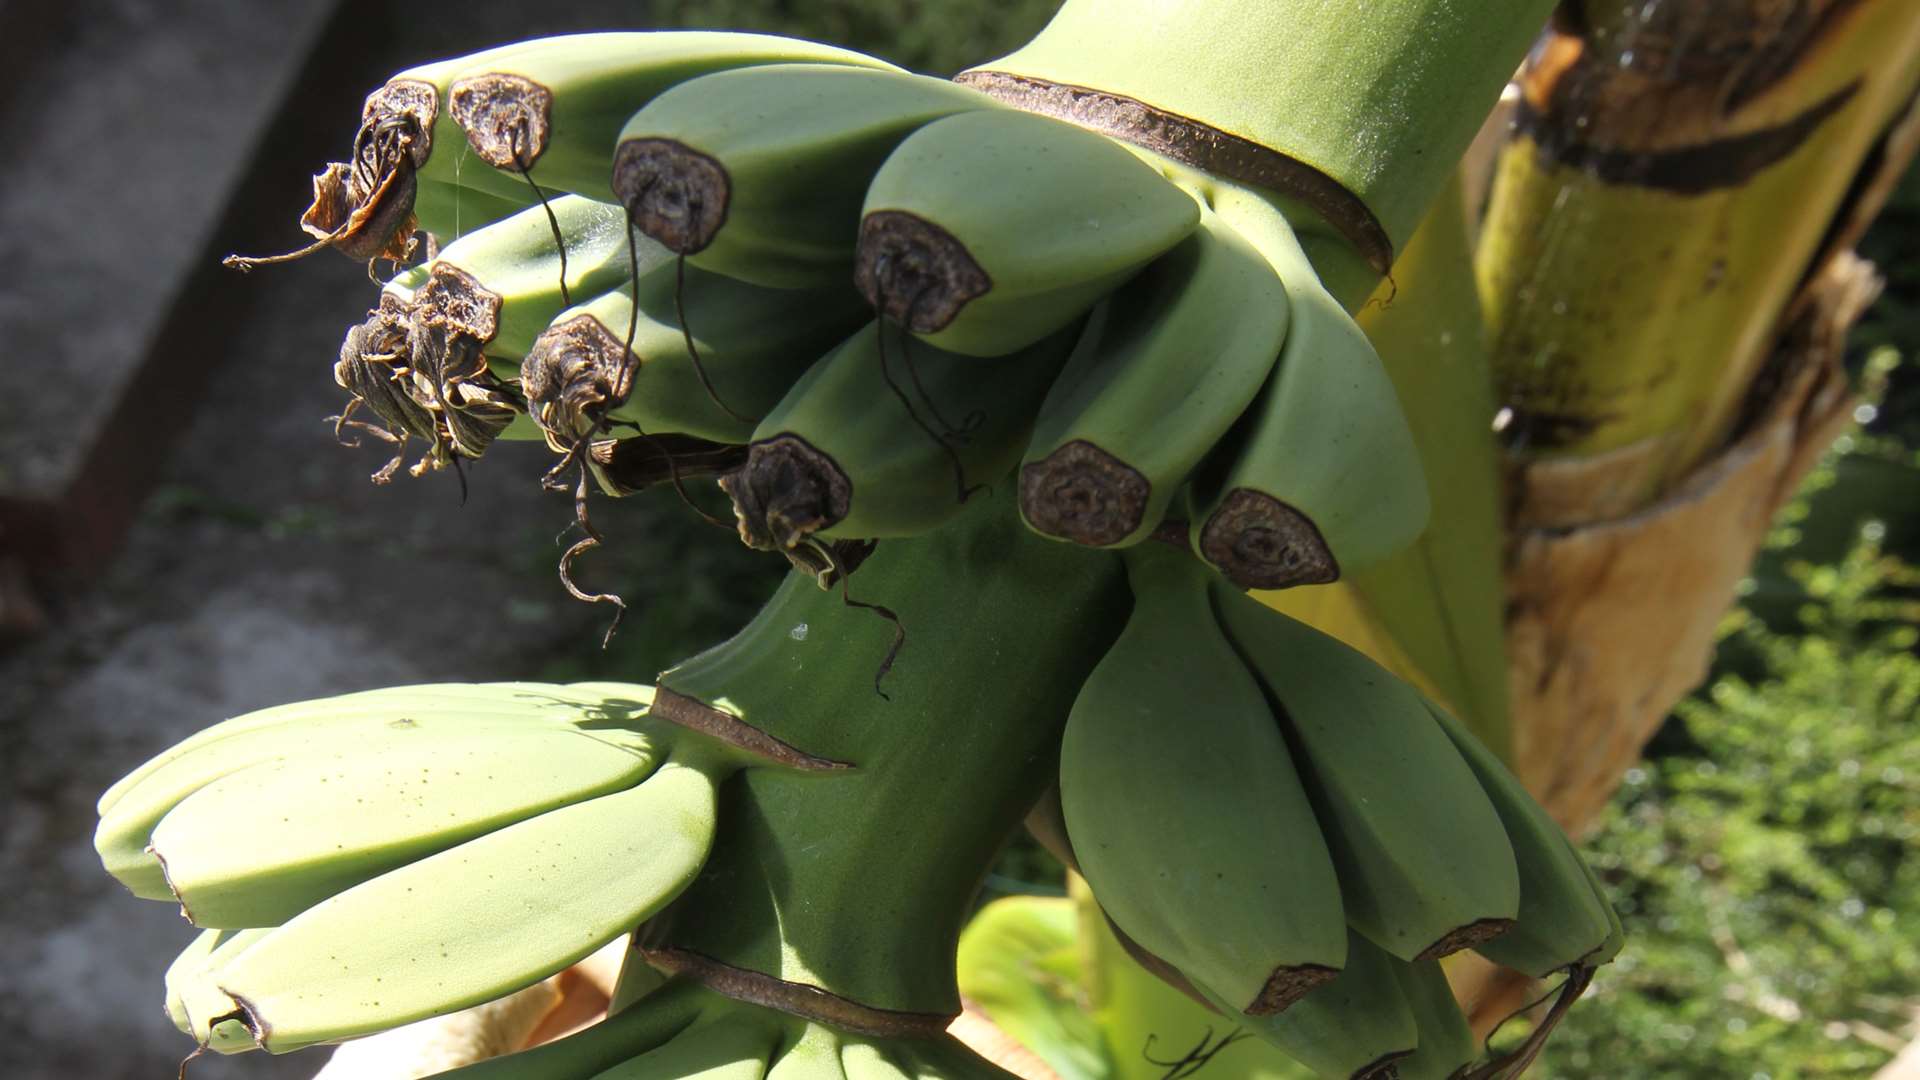 Bananas are being grown in Larkfield